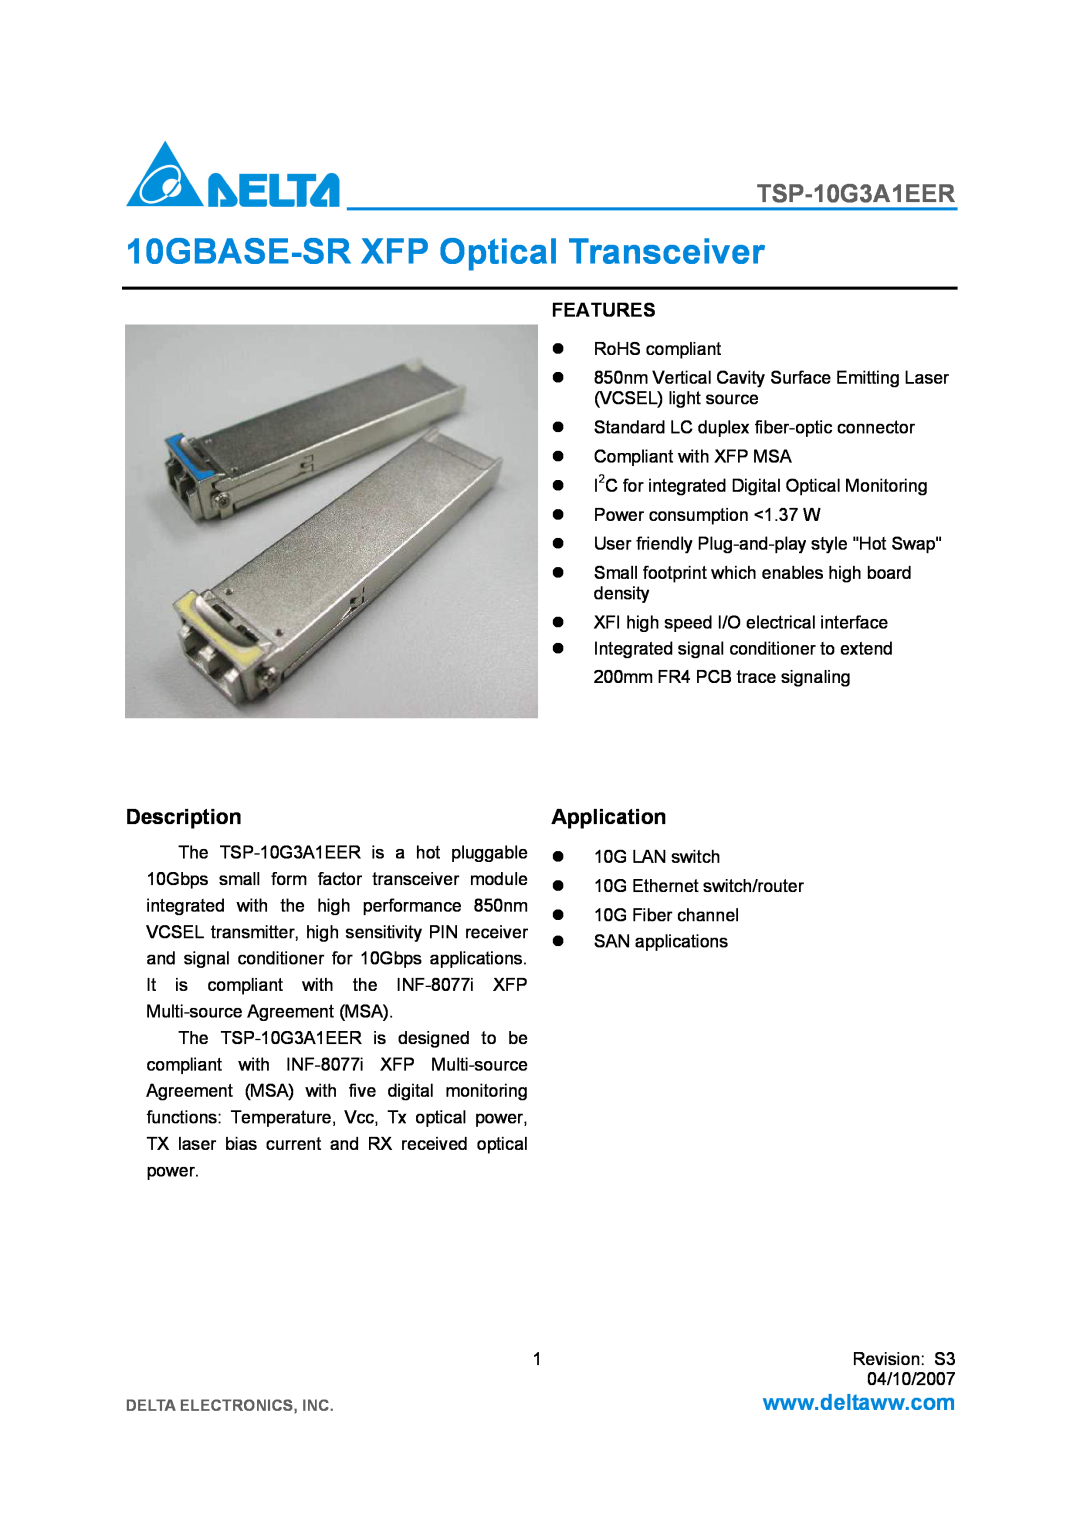 Delta Electronics TSP-10G3A1EER manual Description, Application, 10GBASE-SR XFP Optical Transceiver, Features 